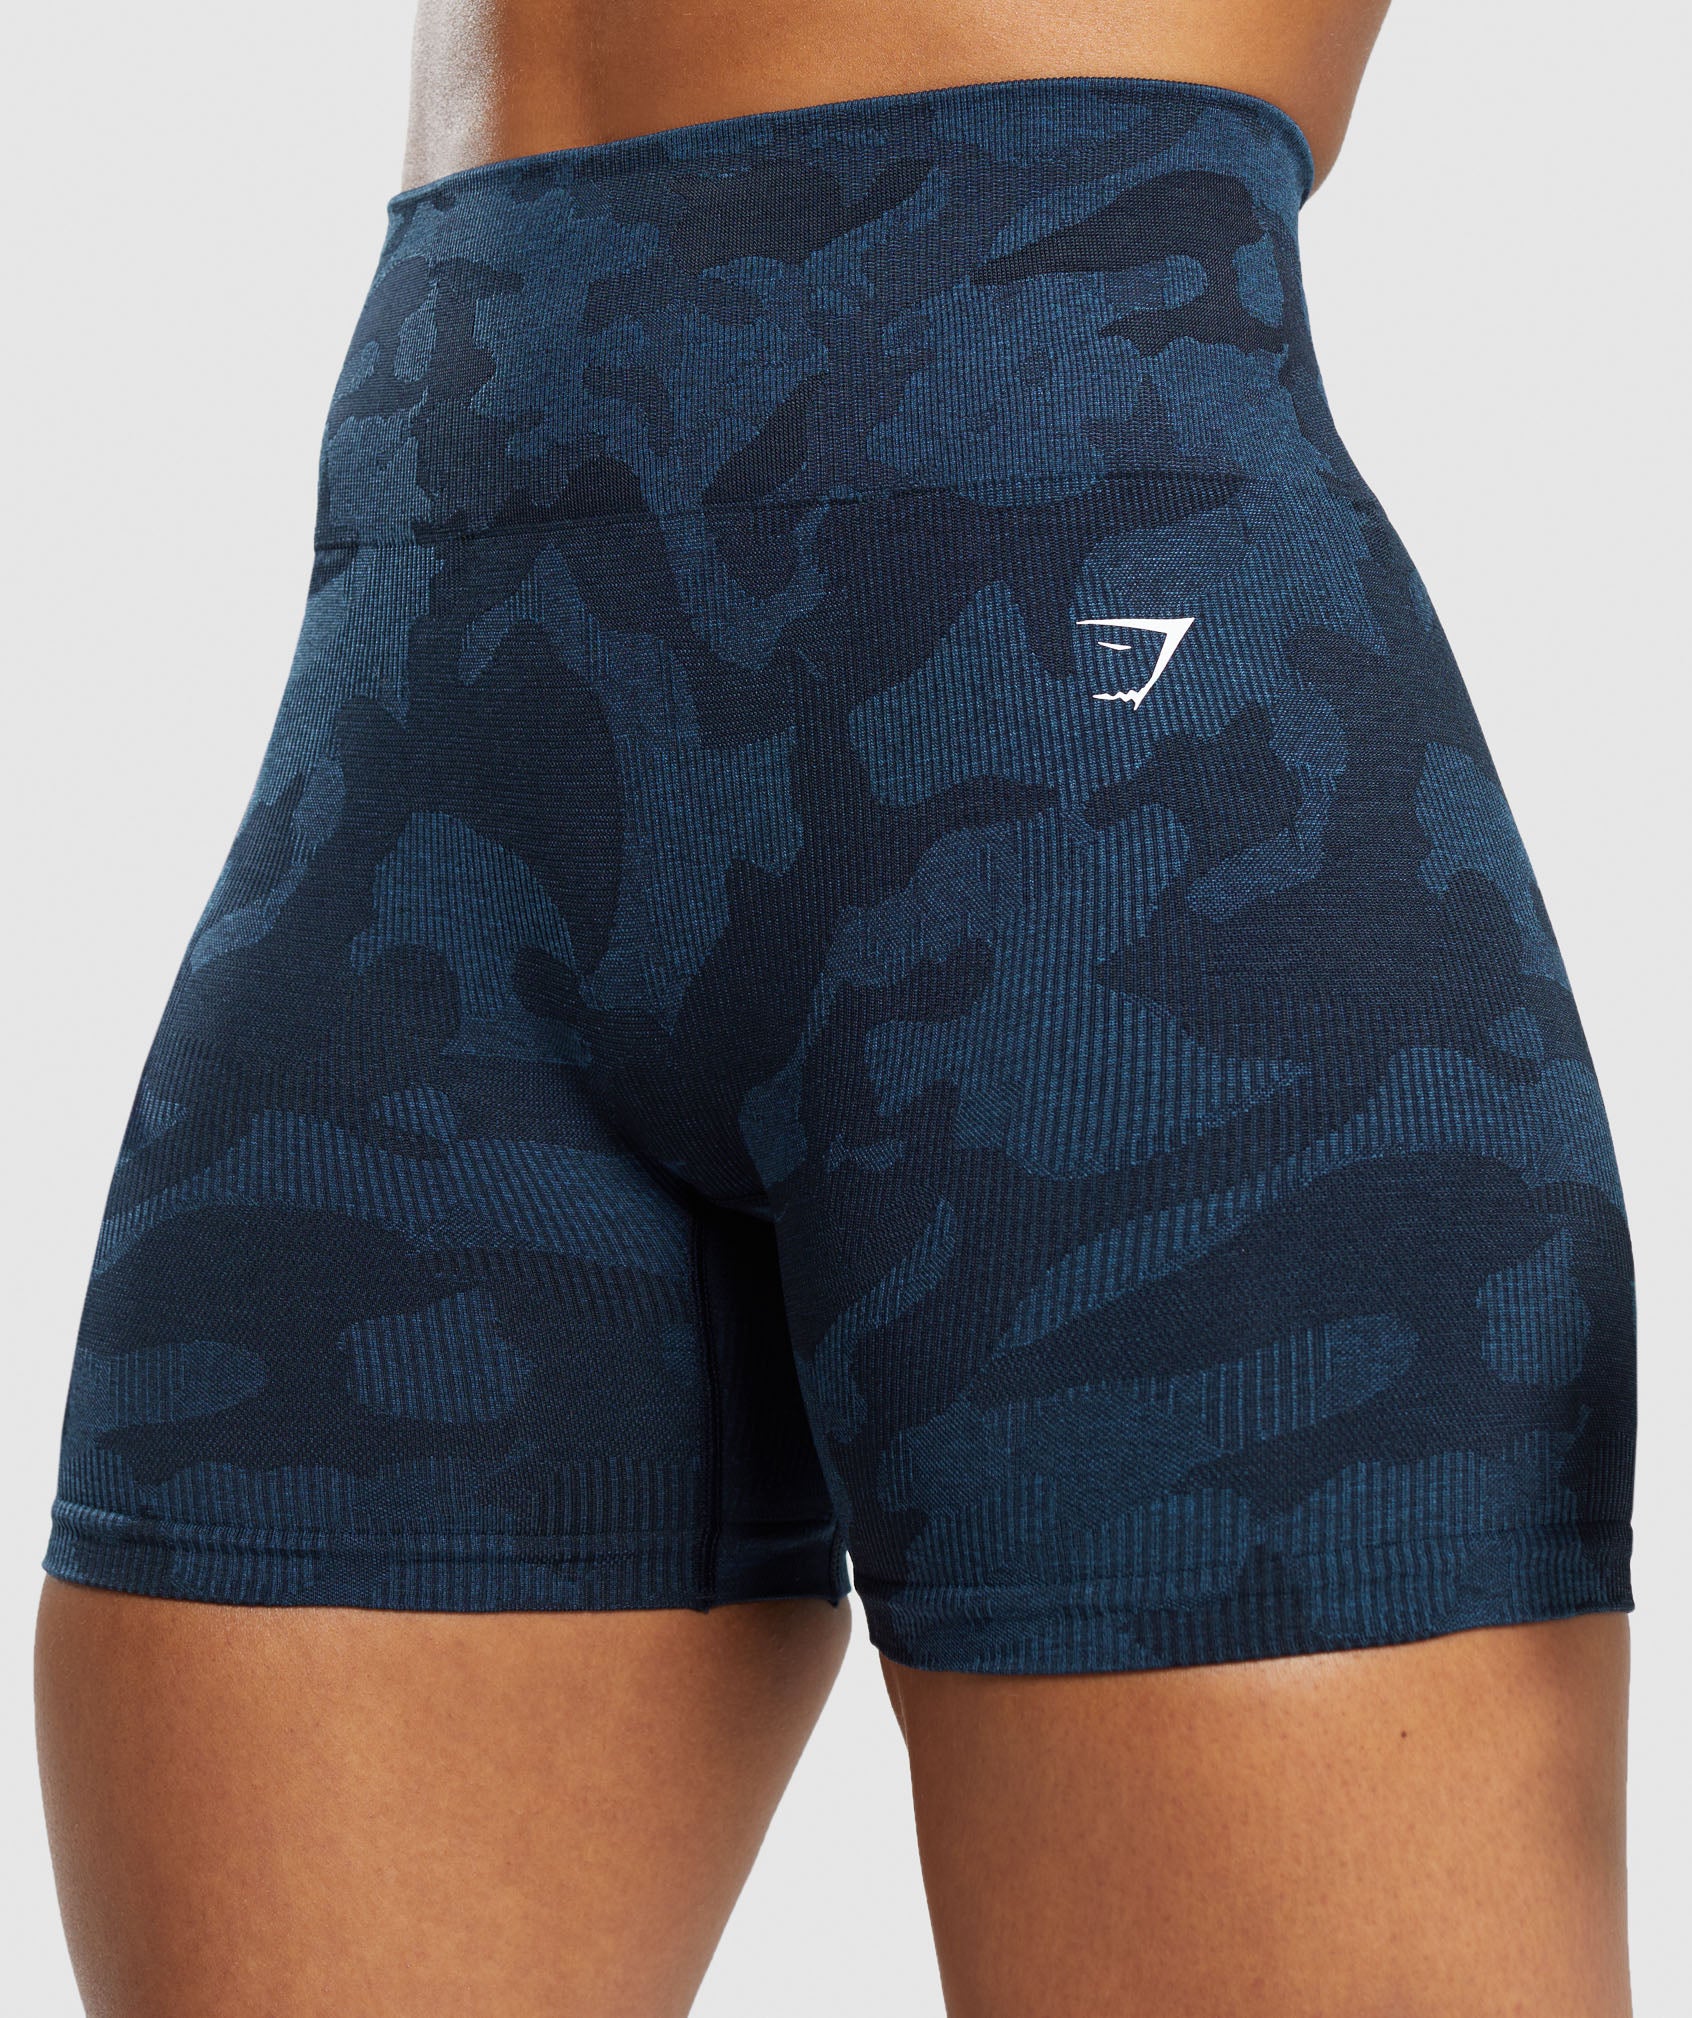 GS  Adapt Camo Seamless Ribbed Shorts - Midnight Blue/Ash Blue